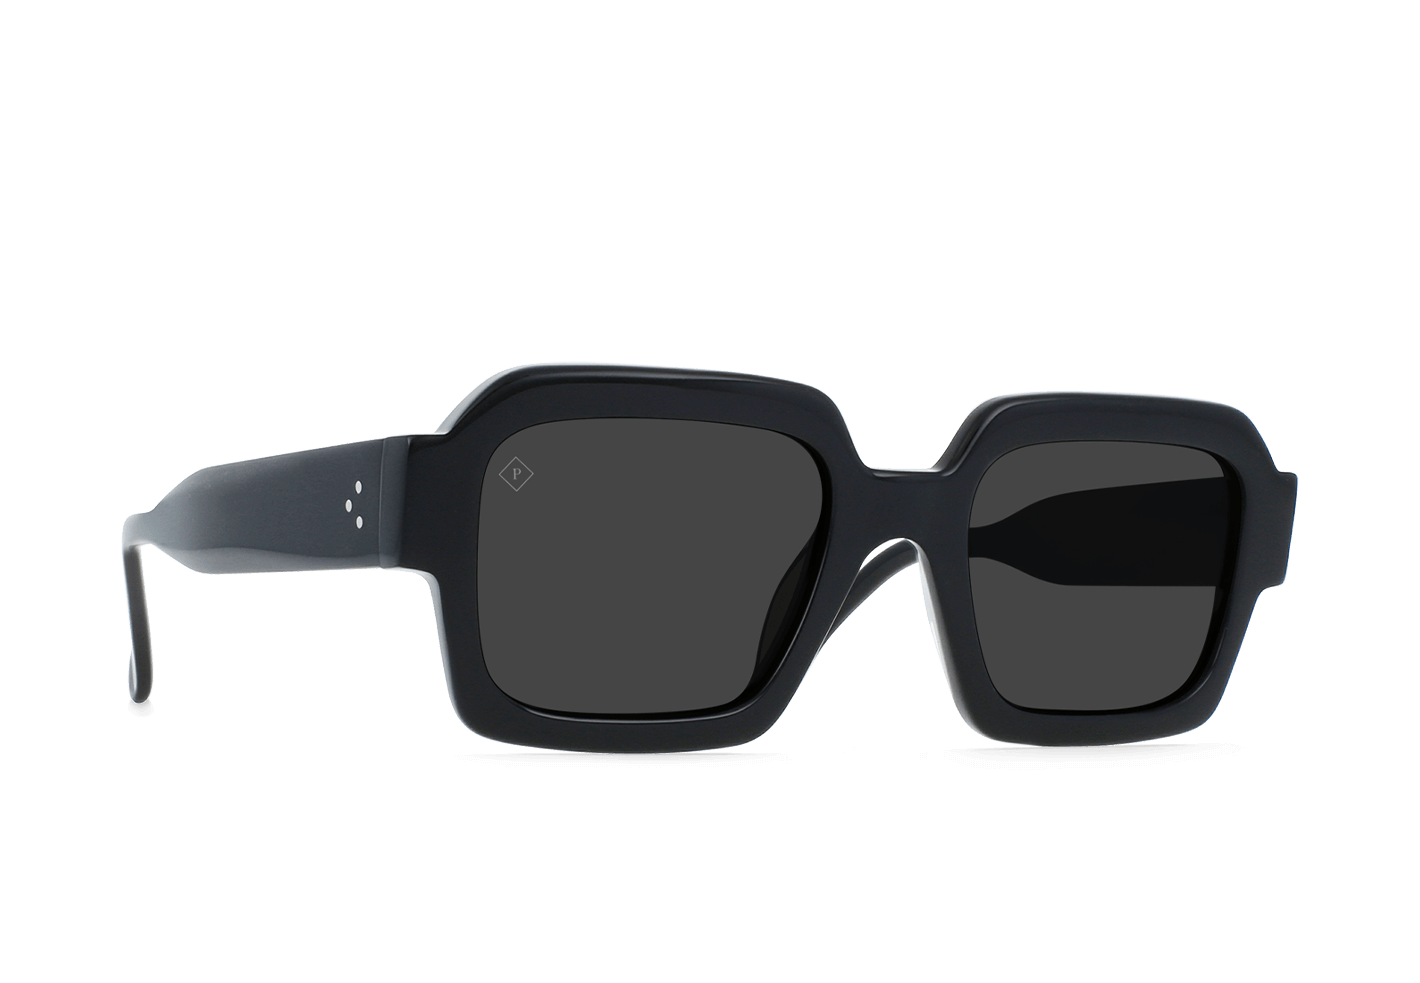 Louis Vuitton sunglasses hard case glasses black glasses